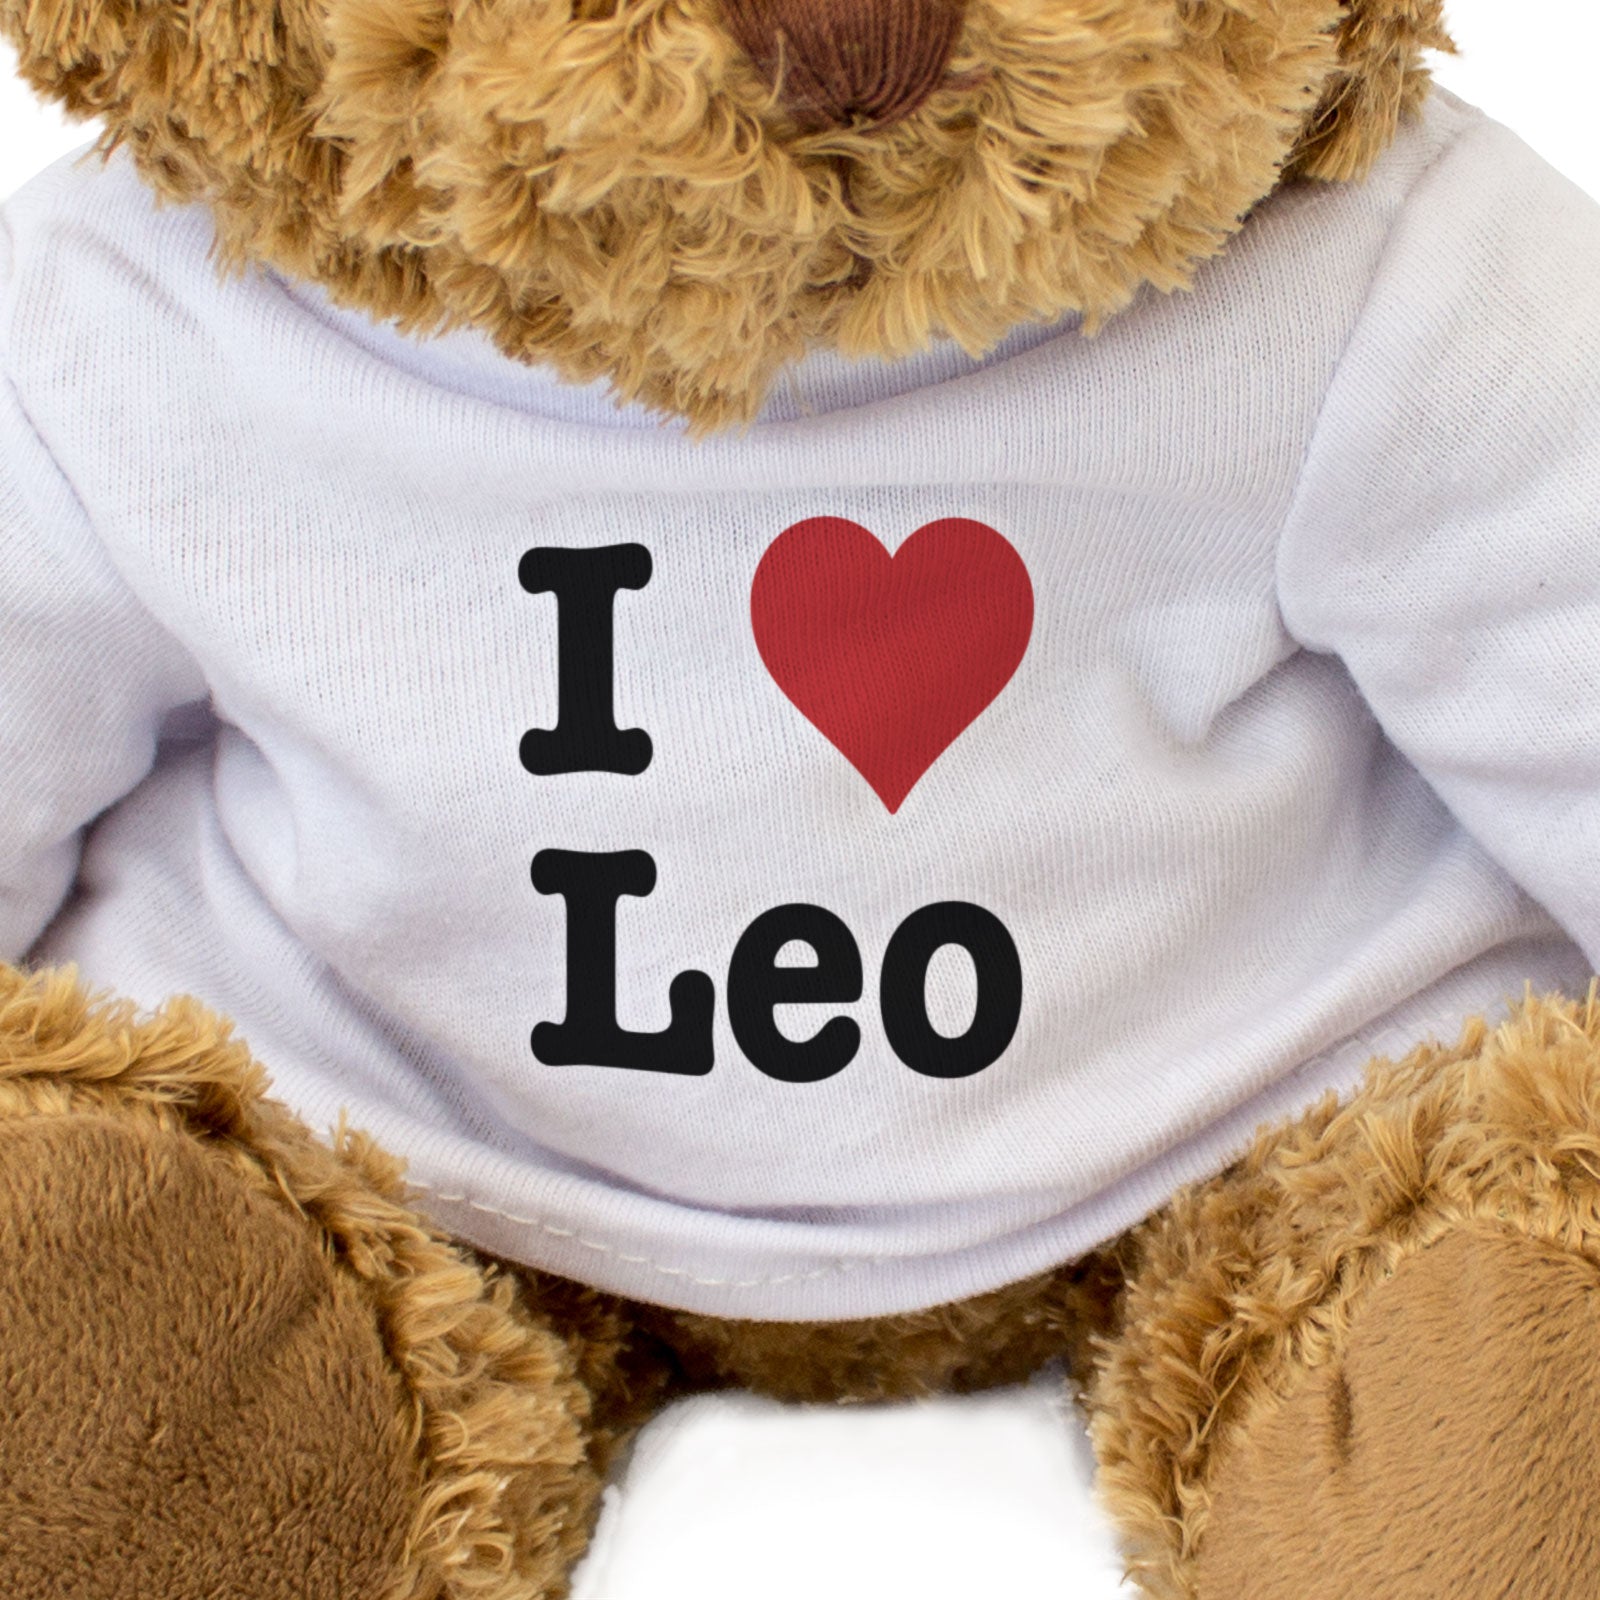 I Love Leo - Teddy Bear